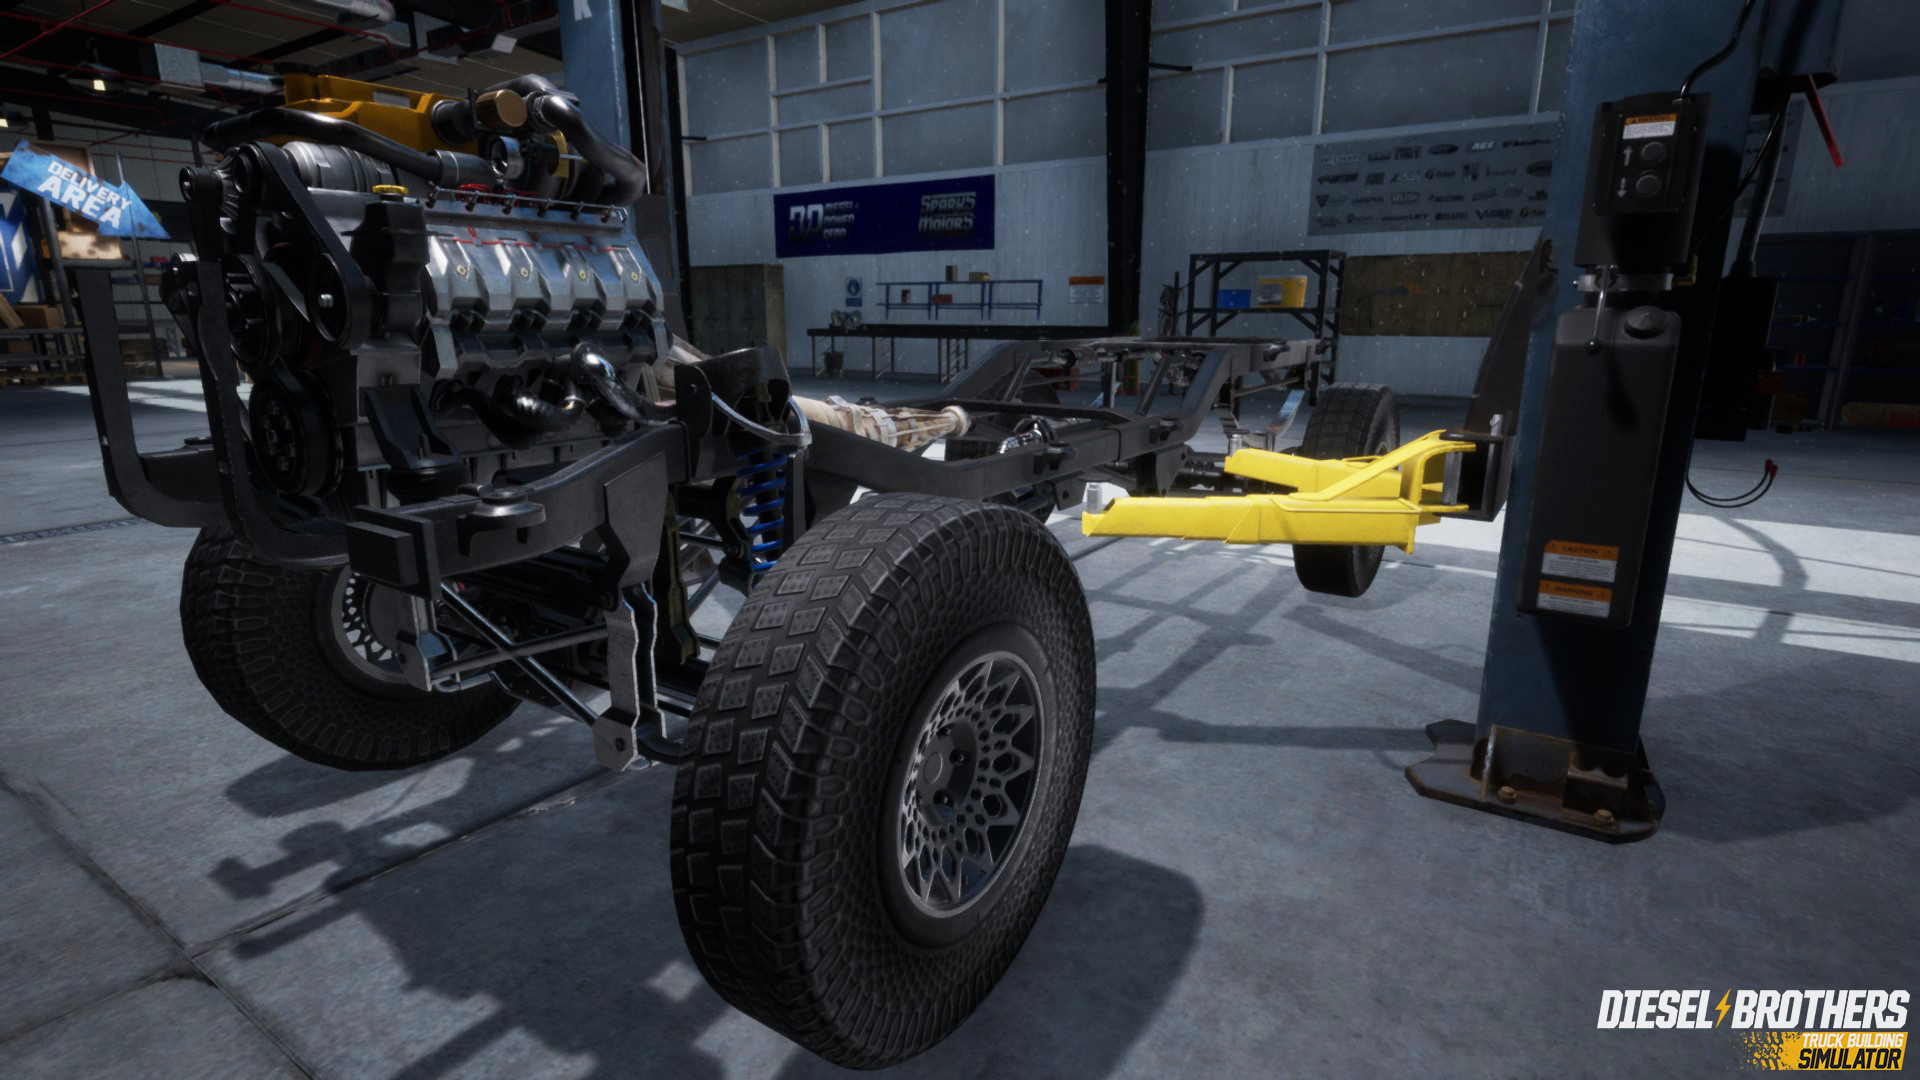 Diesel Brothers: Truck Building Simulator Free Download